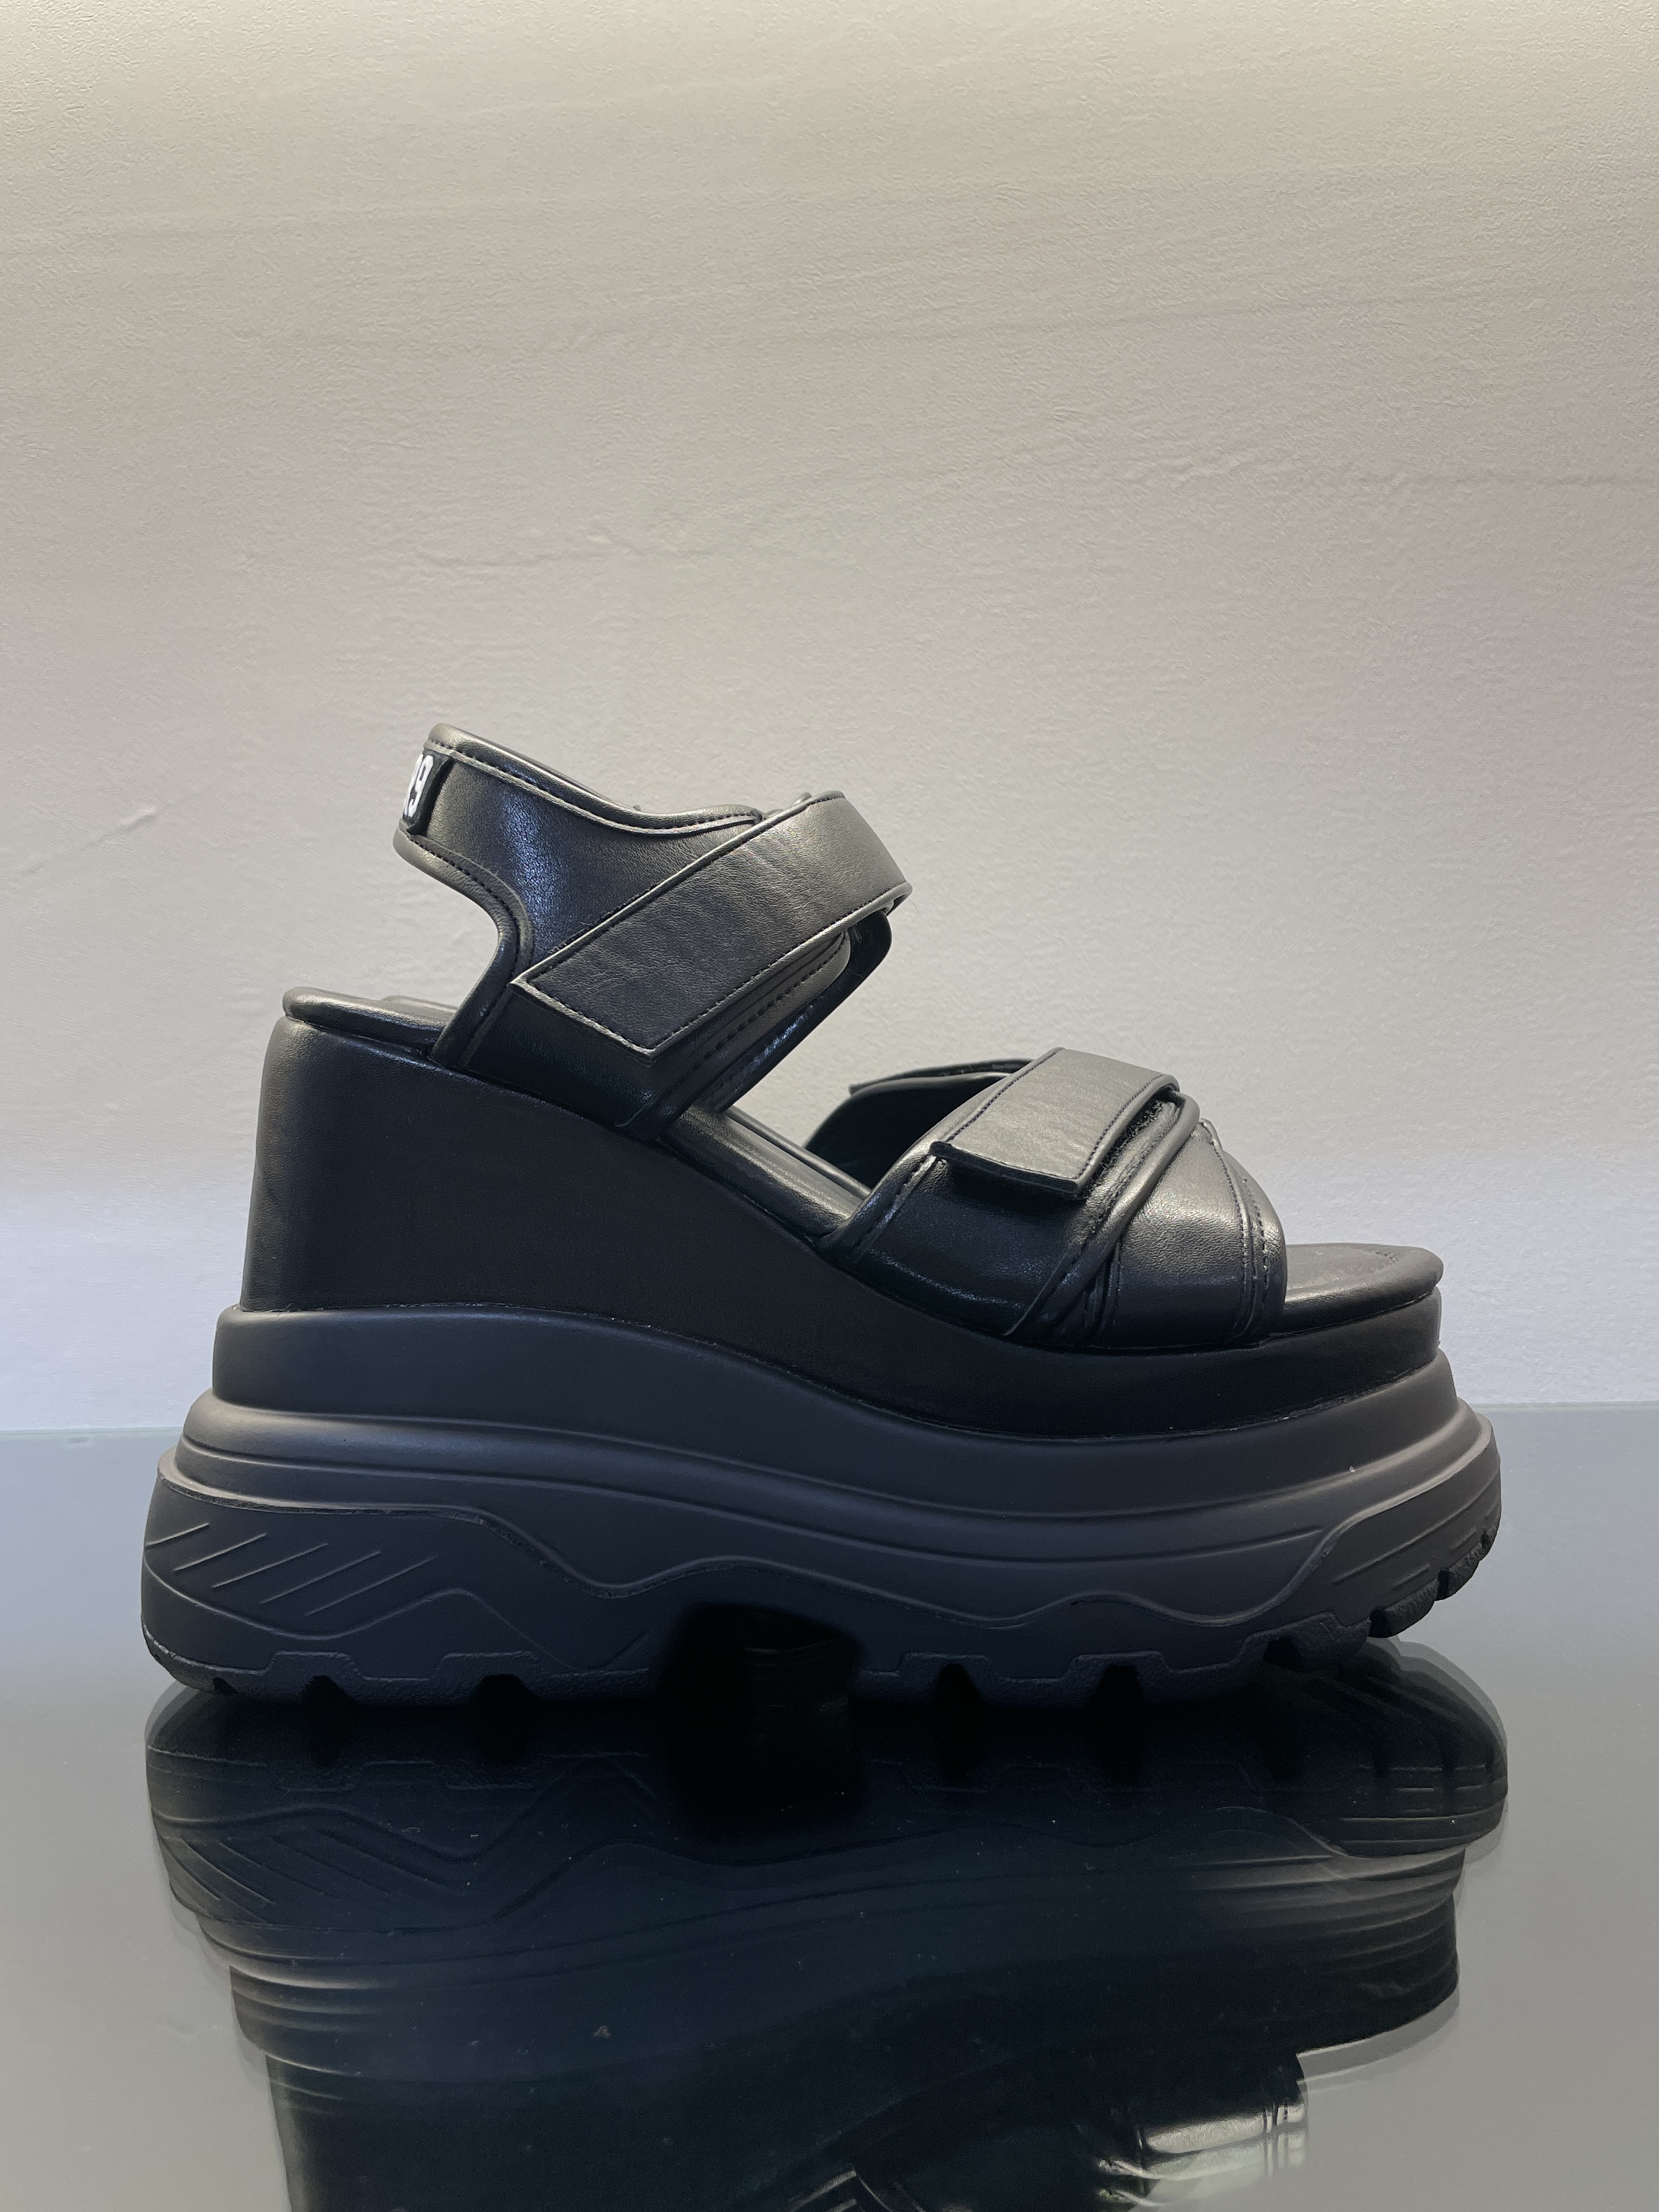 【MIRROR9】Sneakers sandals High